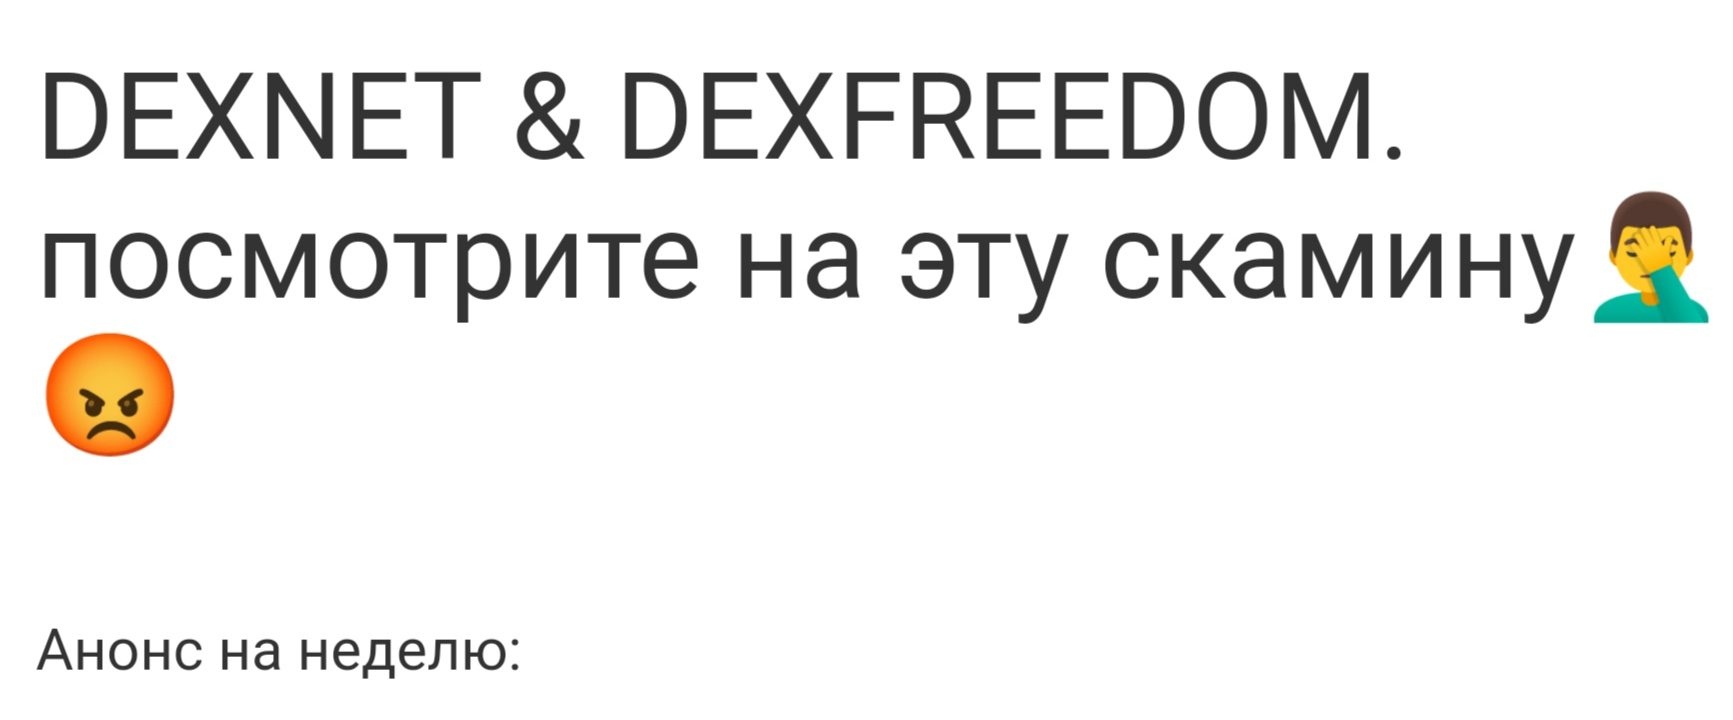 Dex Freedom - отзывы